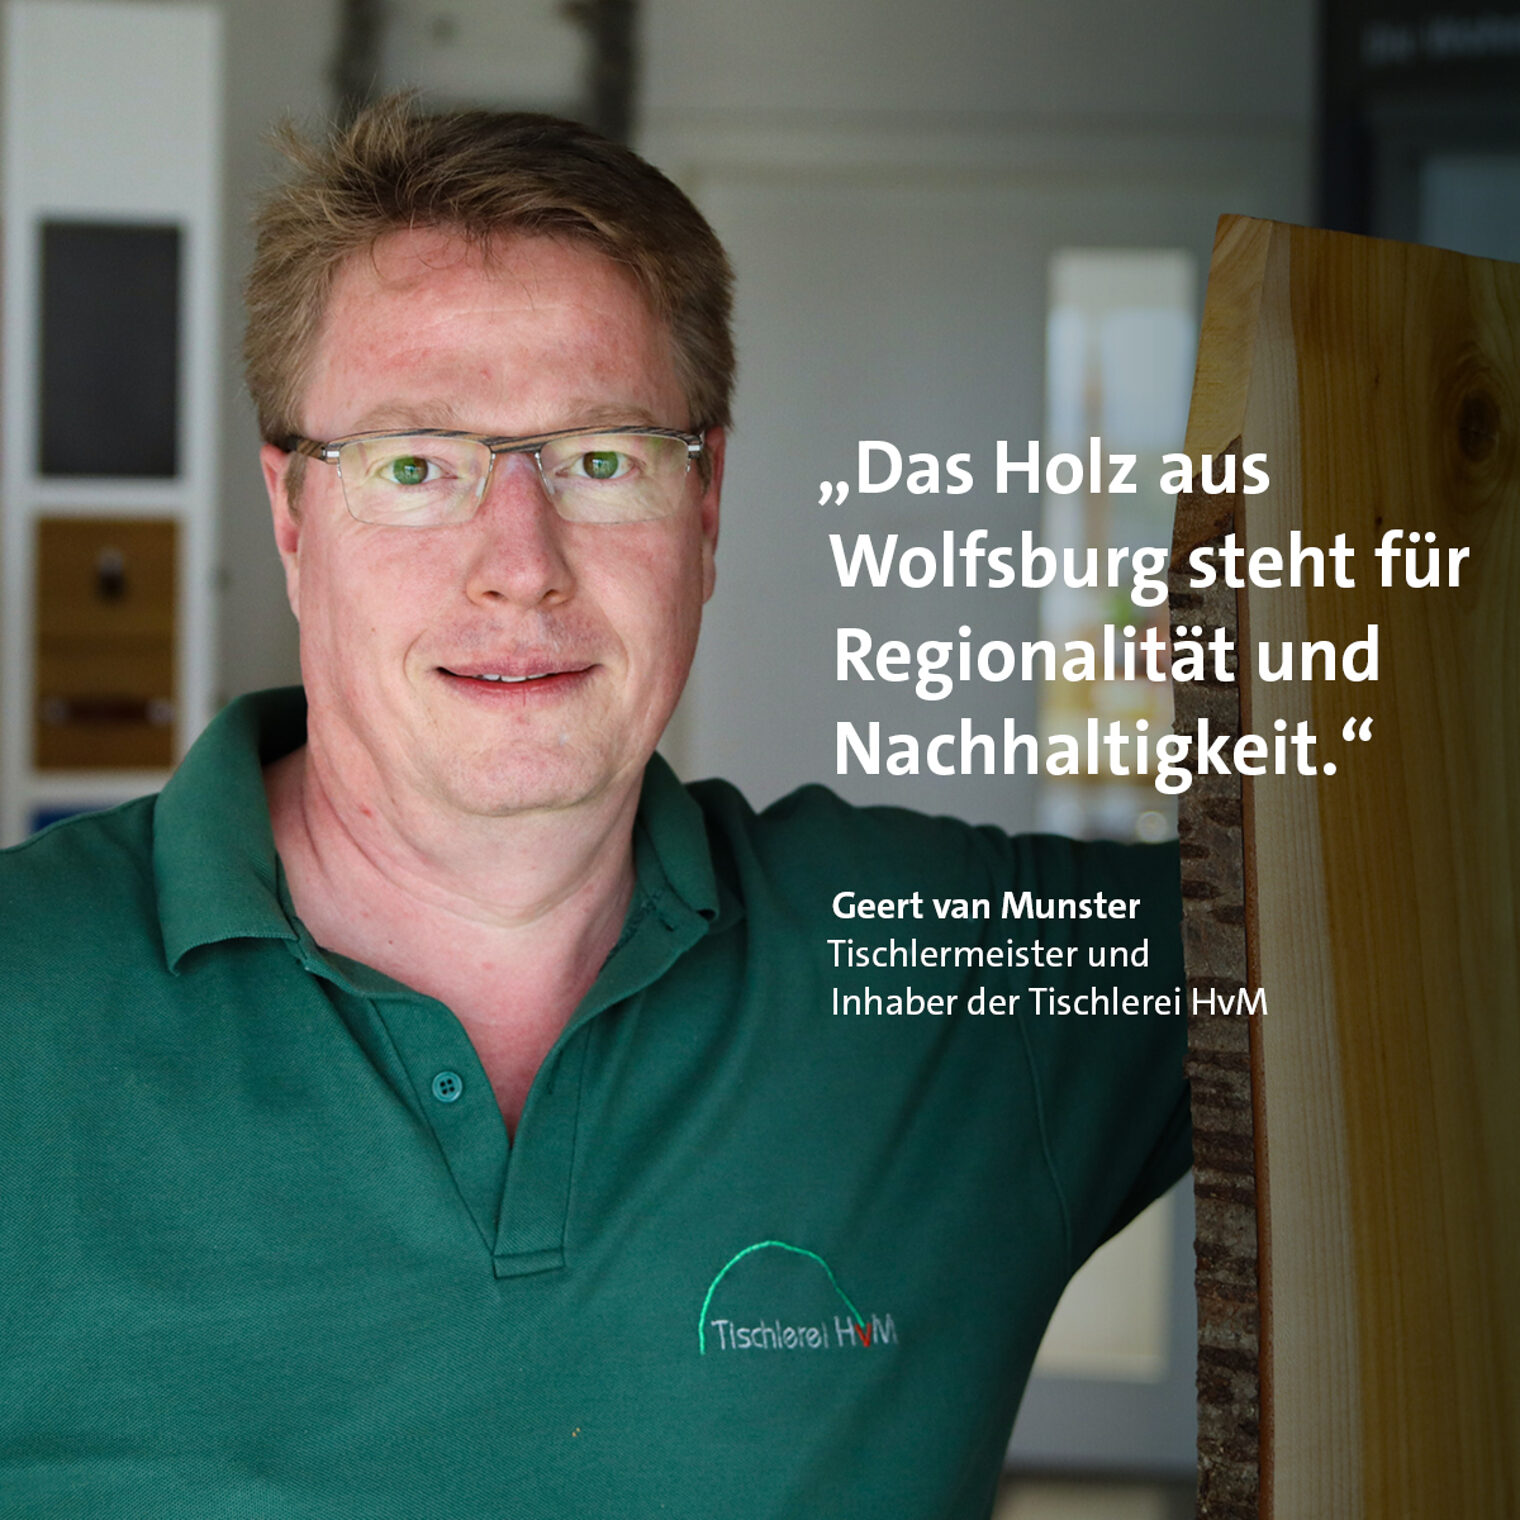 Geert van Munster baut Möbel aus regionalem Holz. 